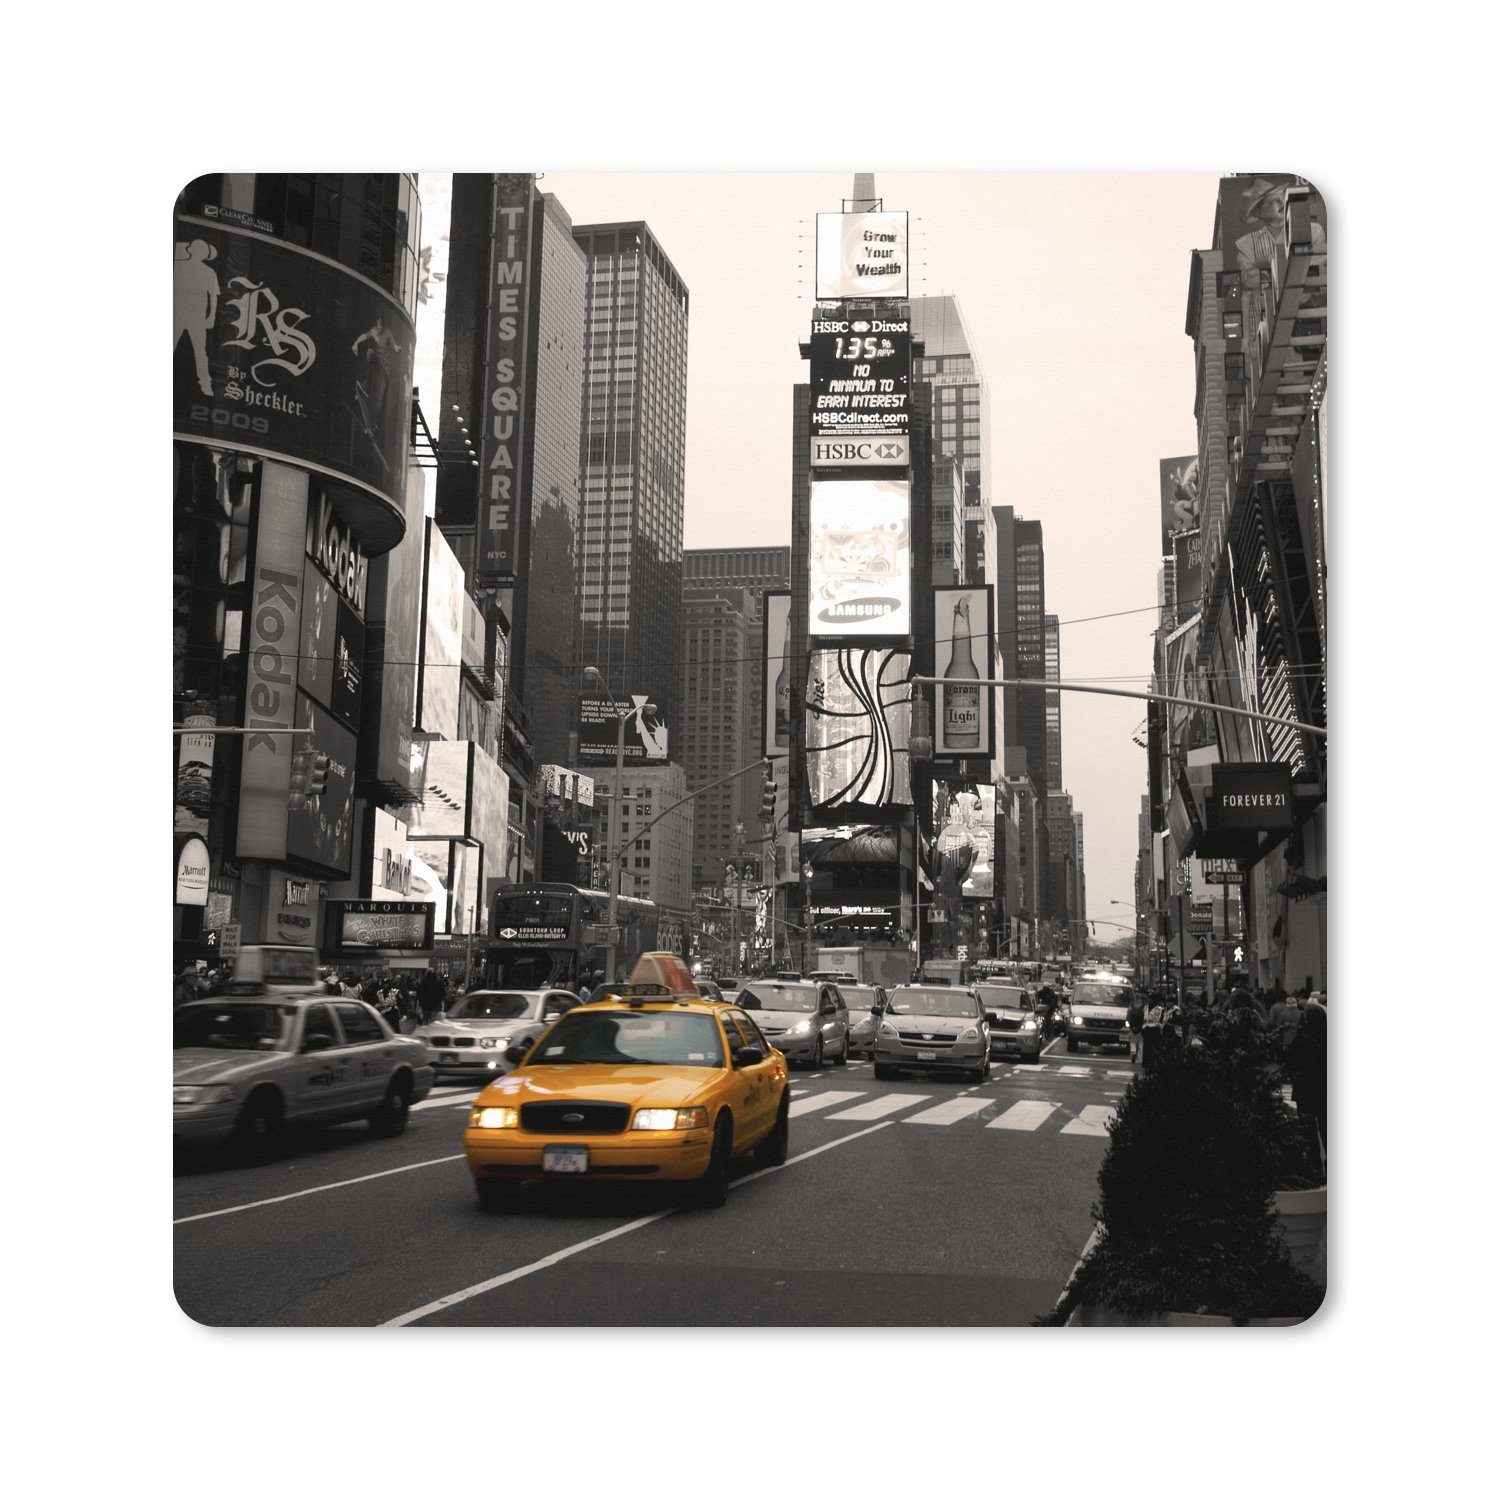 MuchoWow Gaming Mauspad Times Square - Taxi - Gelb (1-St), Gaming, Rutschfester Unterseite, Mausunterlage, 80x80 cm, XXL, Großes